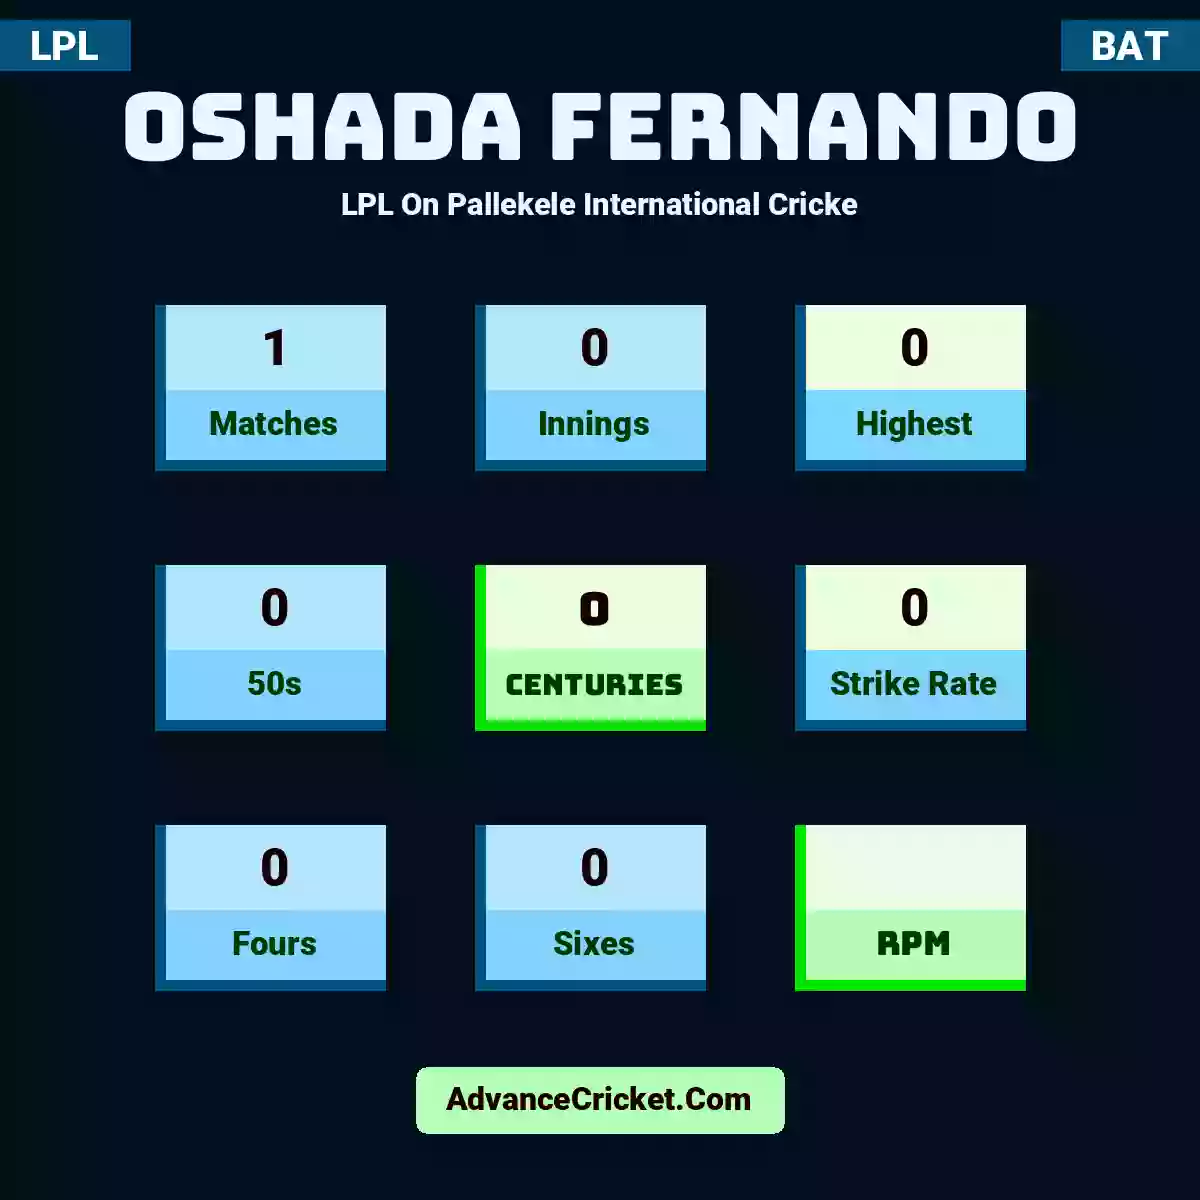 Oshada Fernando LPL  On Pallekele International Cricke, Oshada Fernando played 1 matches, scored 0 runs as highest, 0 half-centuries, and 0 centuries, with a strike rate of 0. O.Fernando hit 0 fours and 0 sixes.